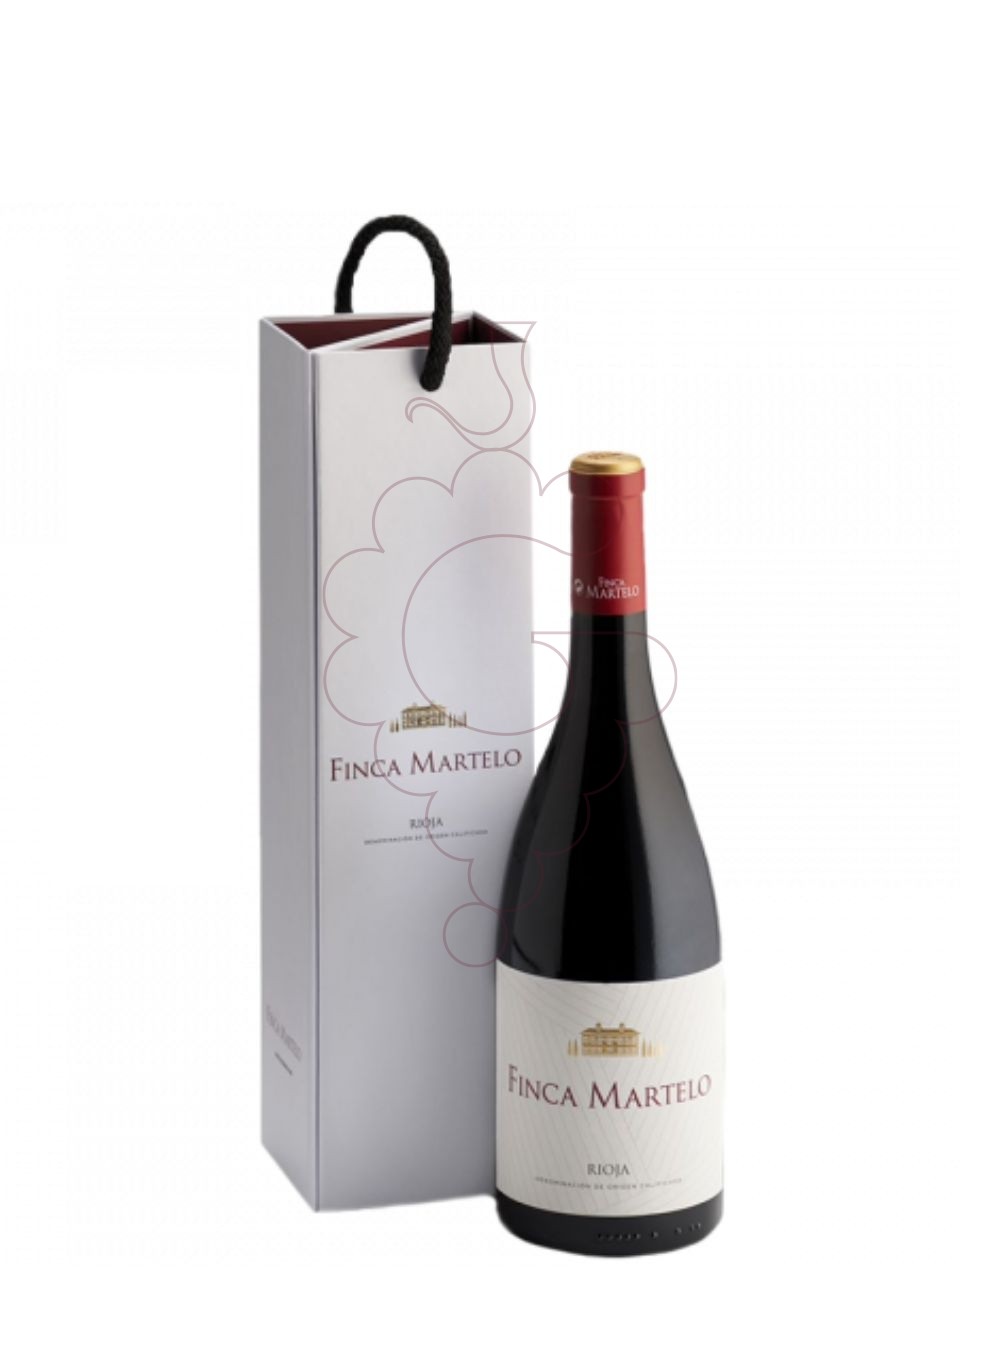 Foto Finca martelo magnum 2019 vino tinto